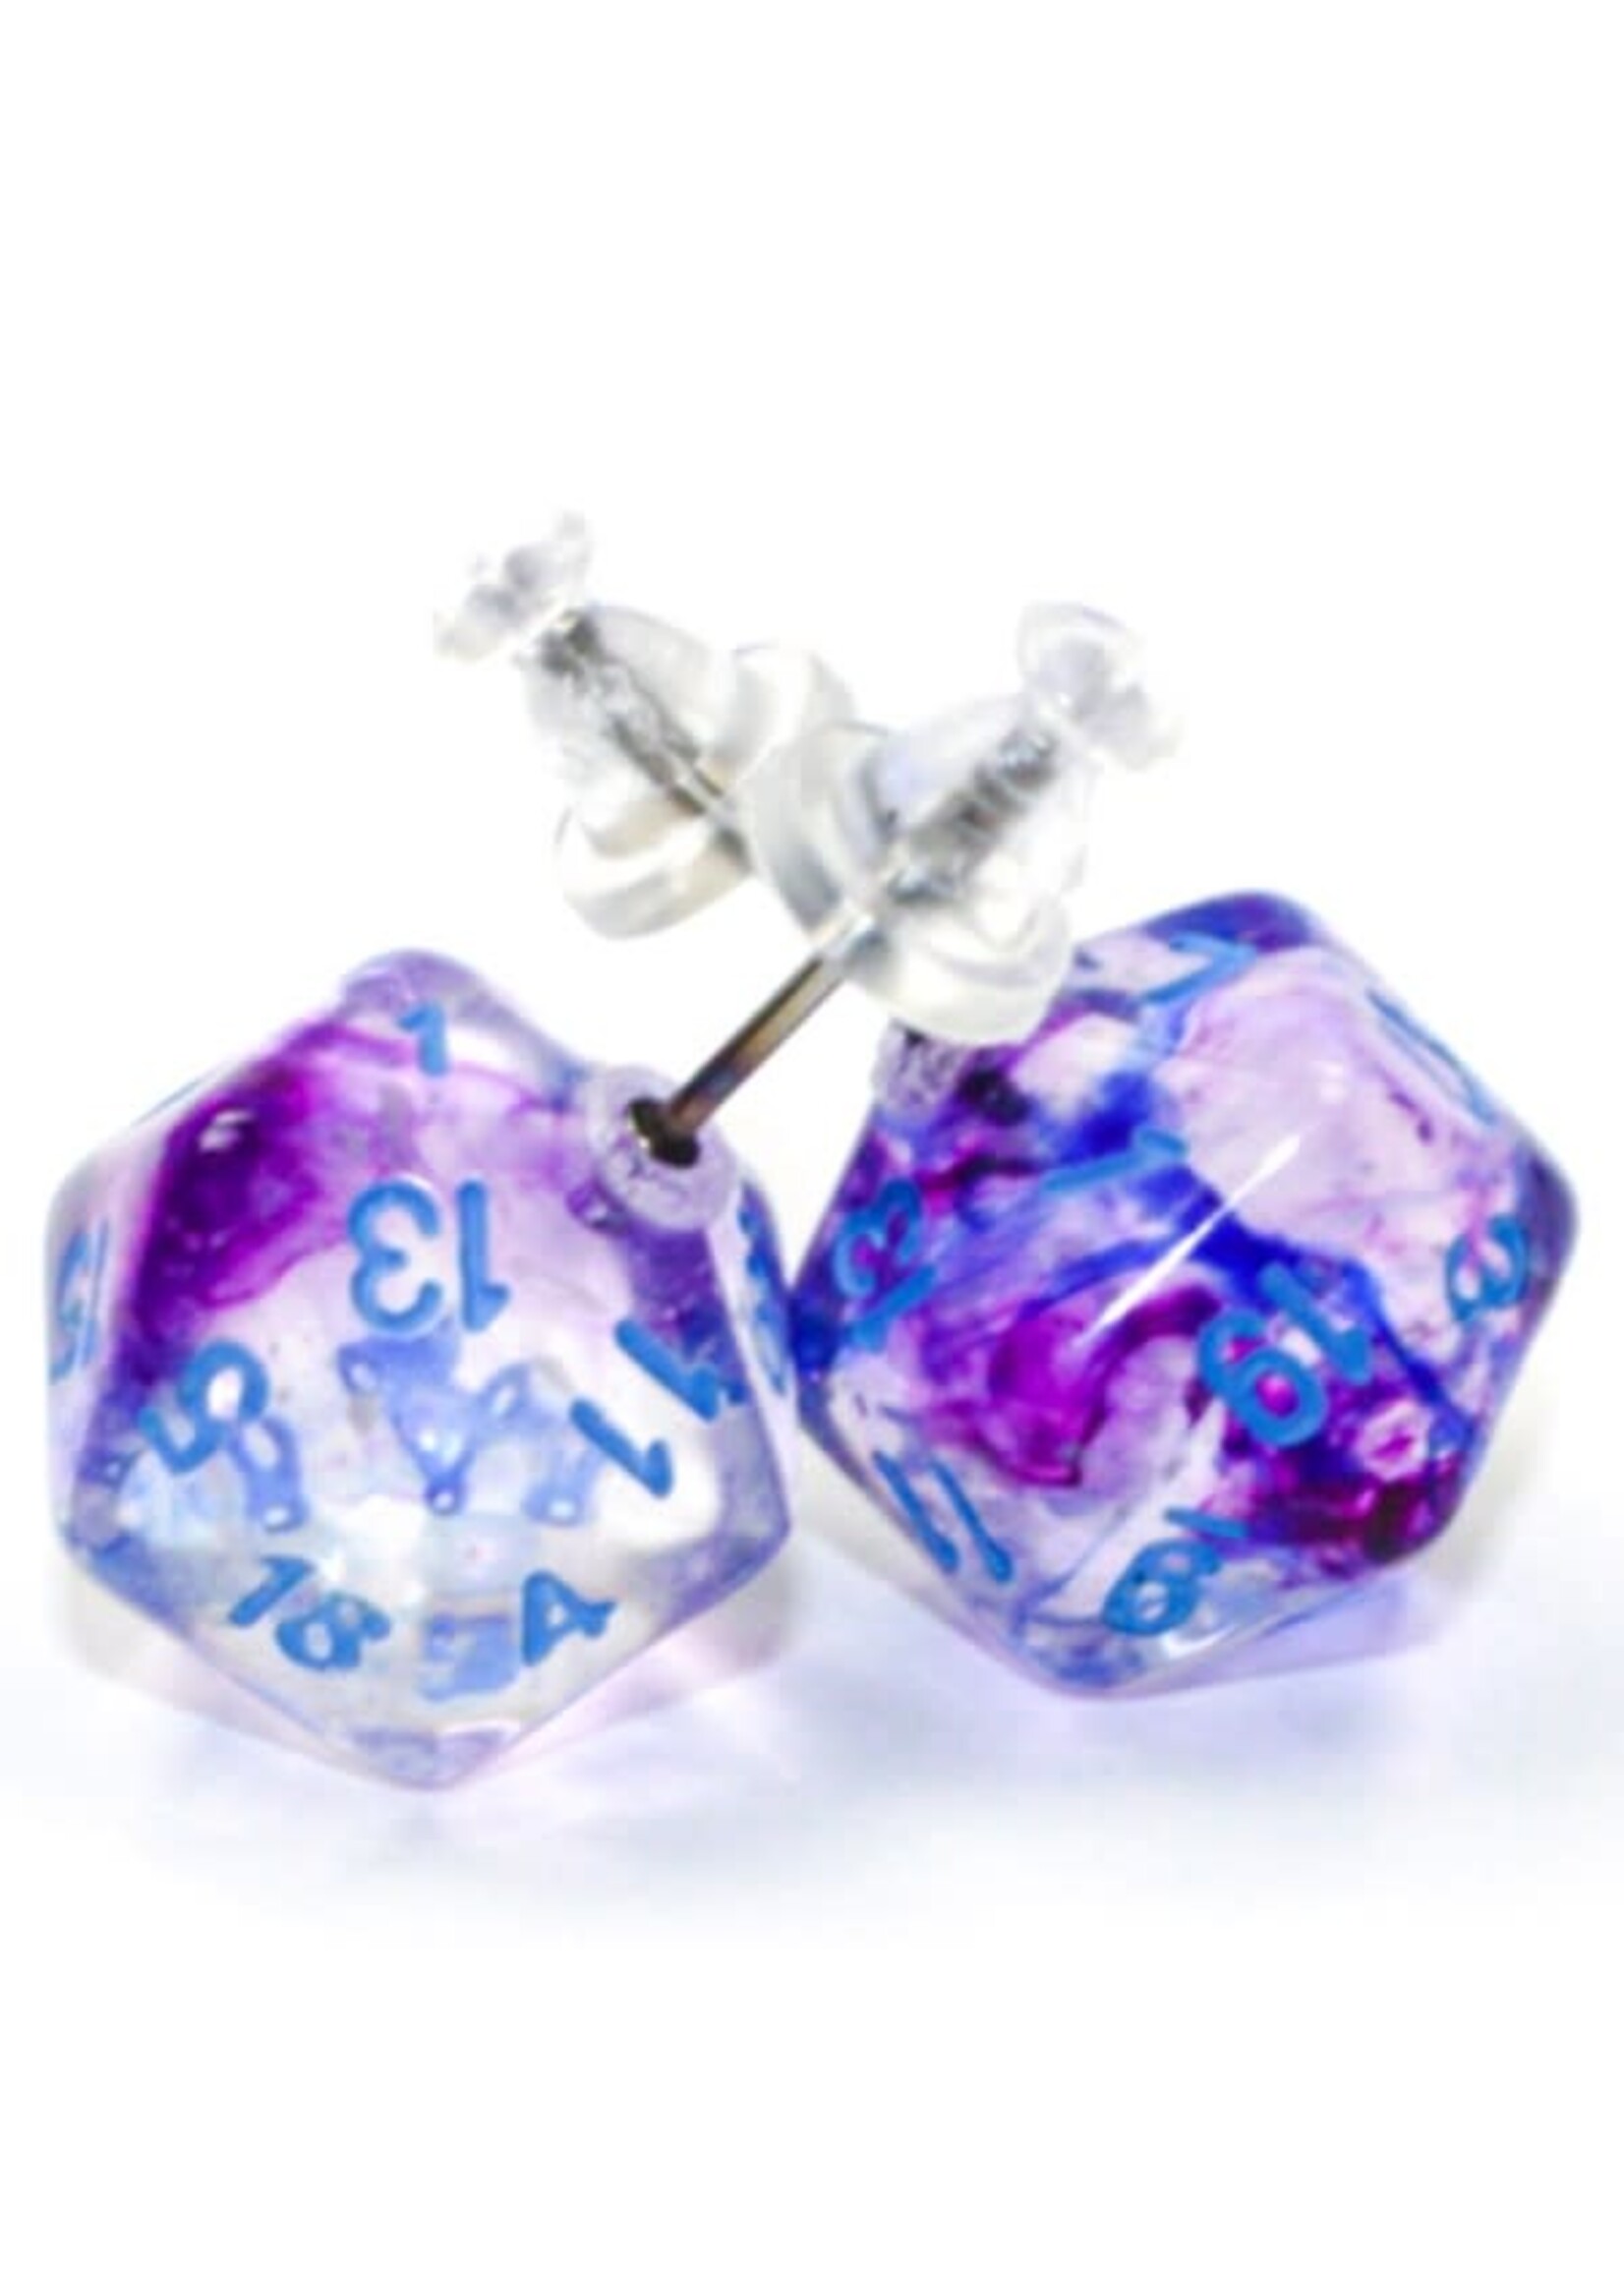 Chessex Stud Earrings Mini d20 - Nebula Nocturnal